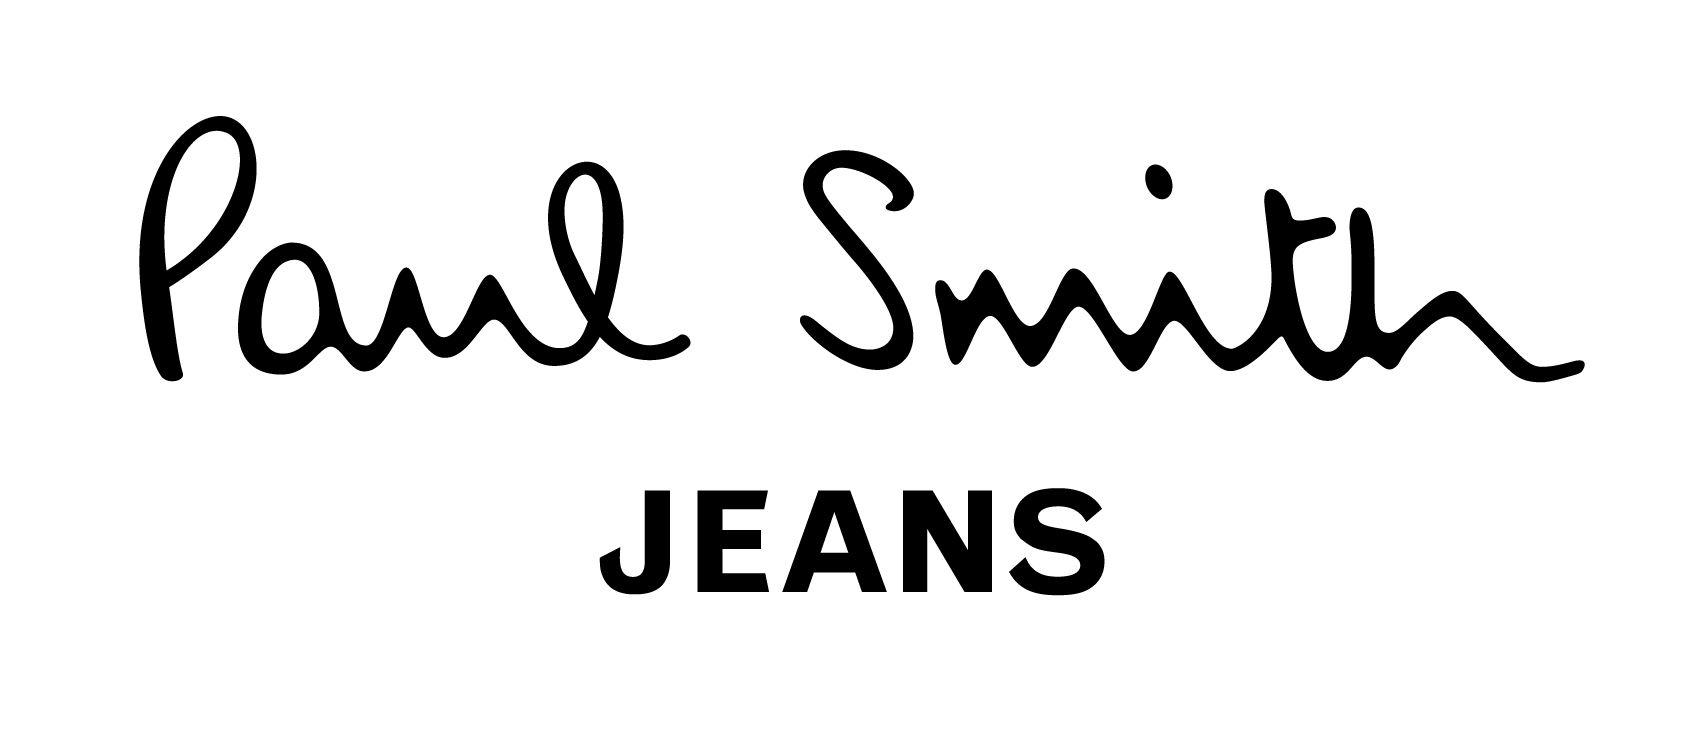 Top Brand Clothing Logo - 15 Top Designer Jeans Brands and Logos - BrandonGaille.com